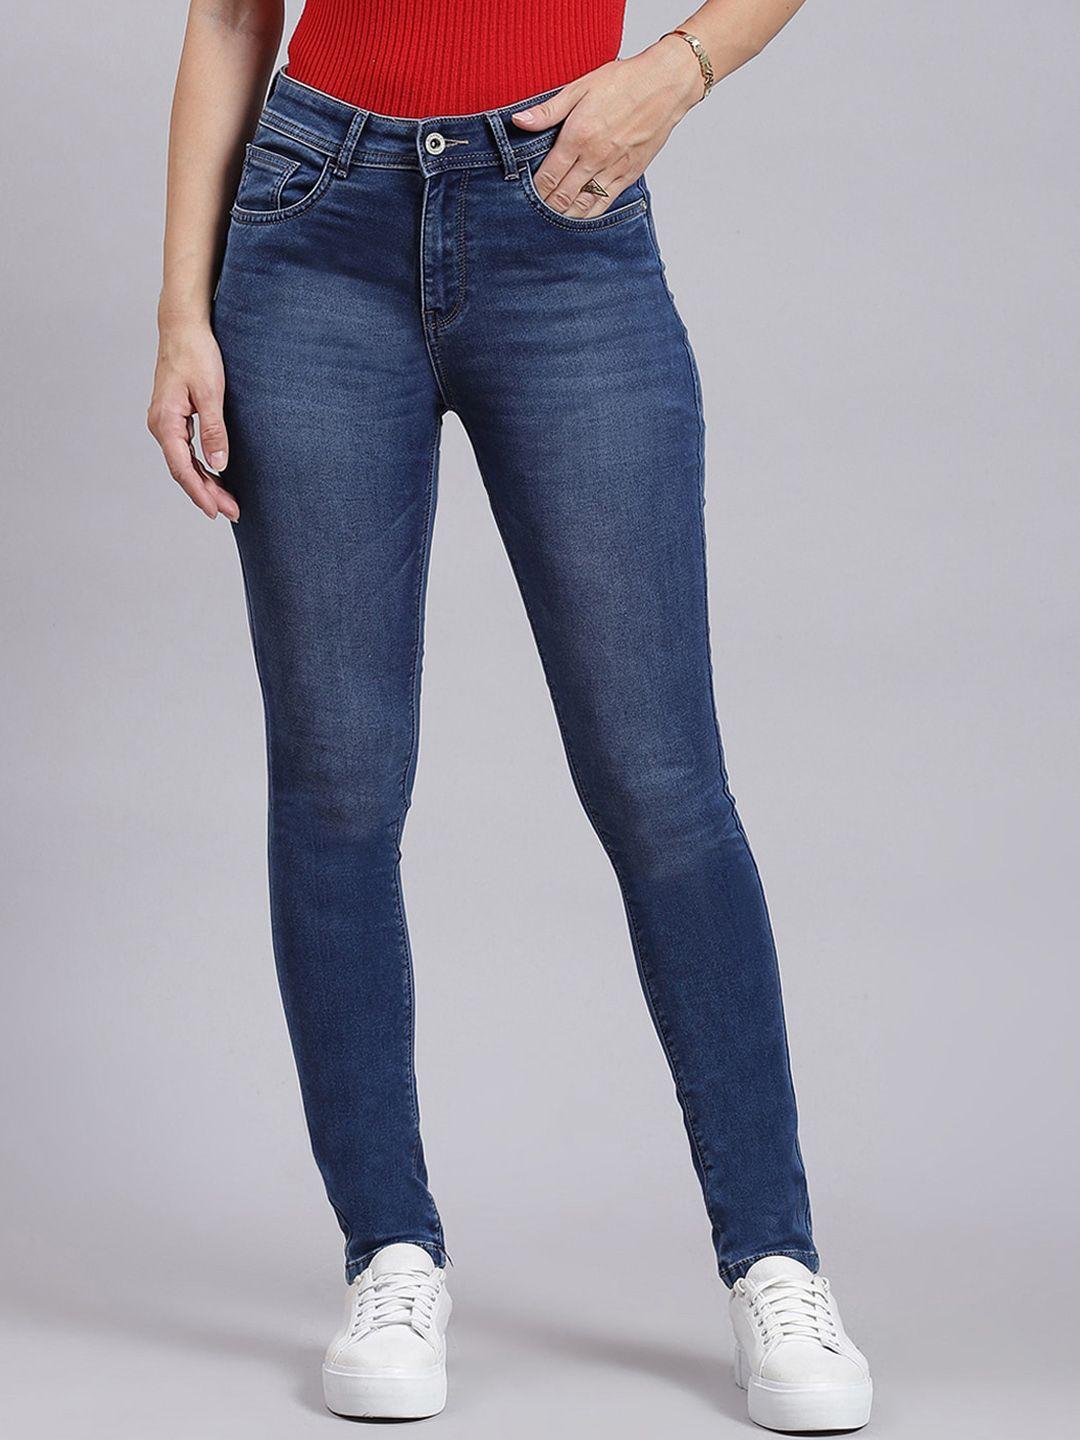 monte-carlo-women-smart-mid-rise-slim-fit-heavy-fade-jeans